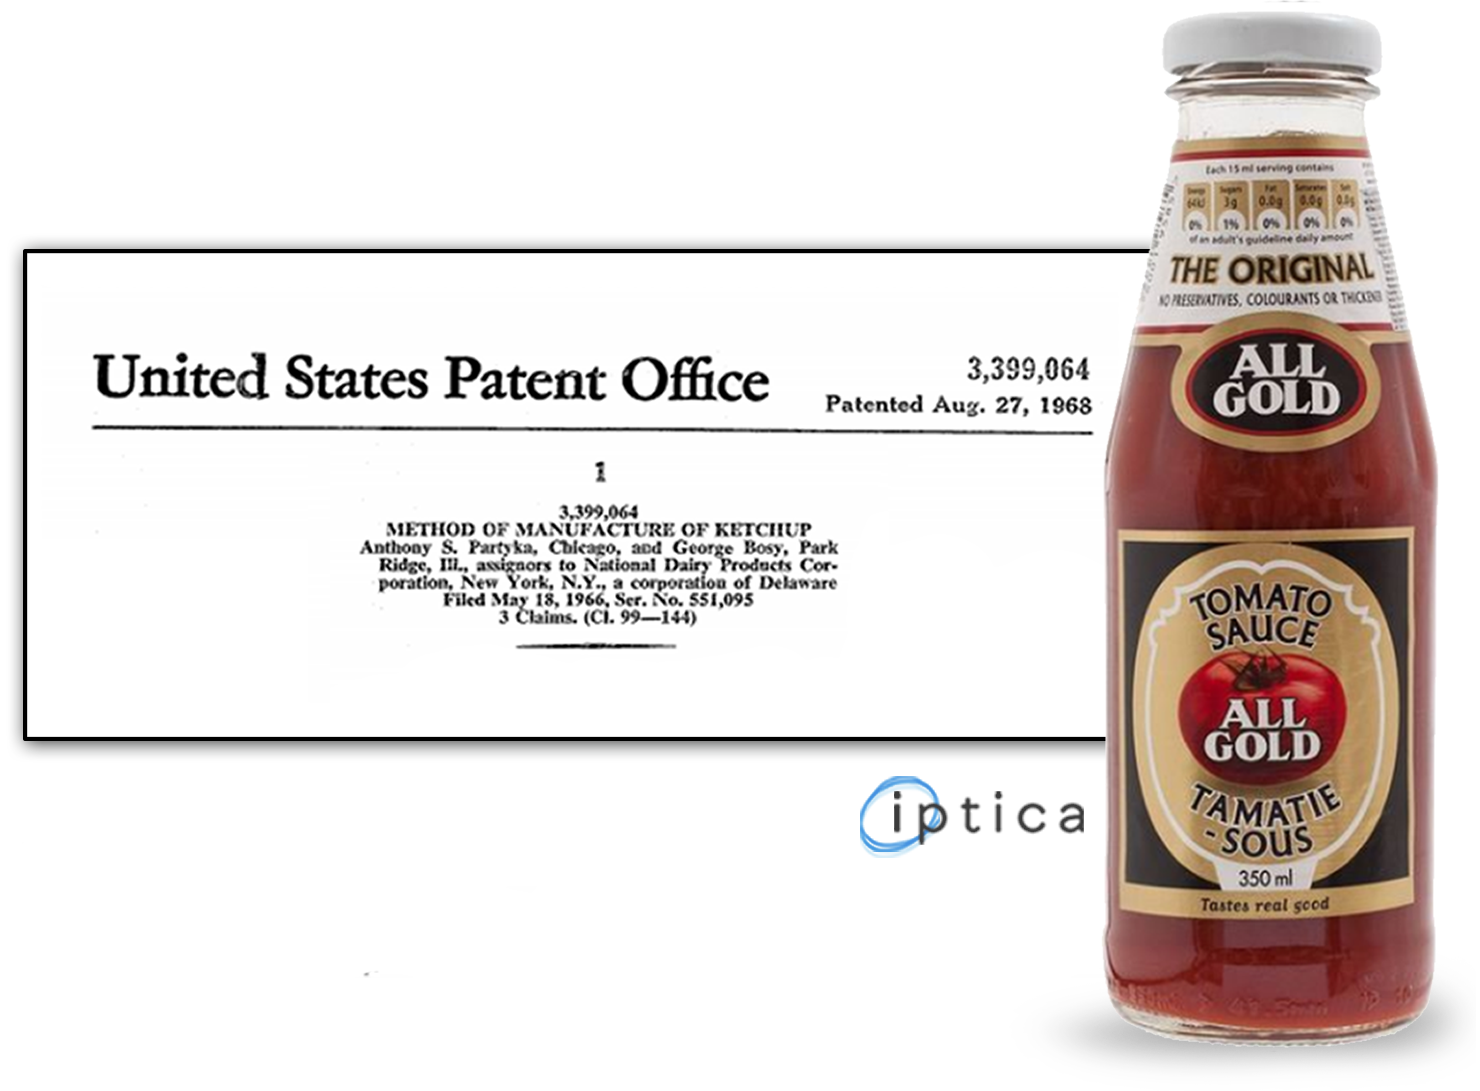 Ketchup tomato sauce patent pending